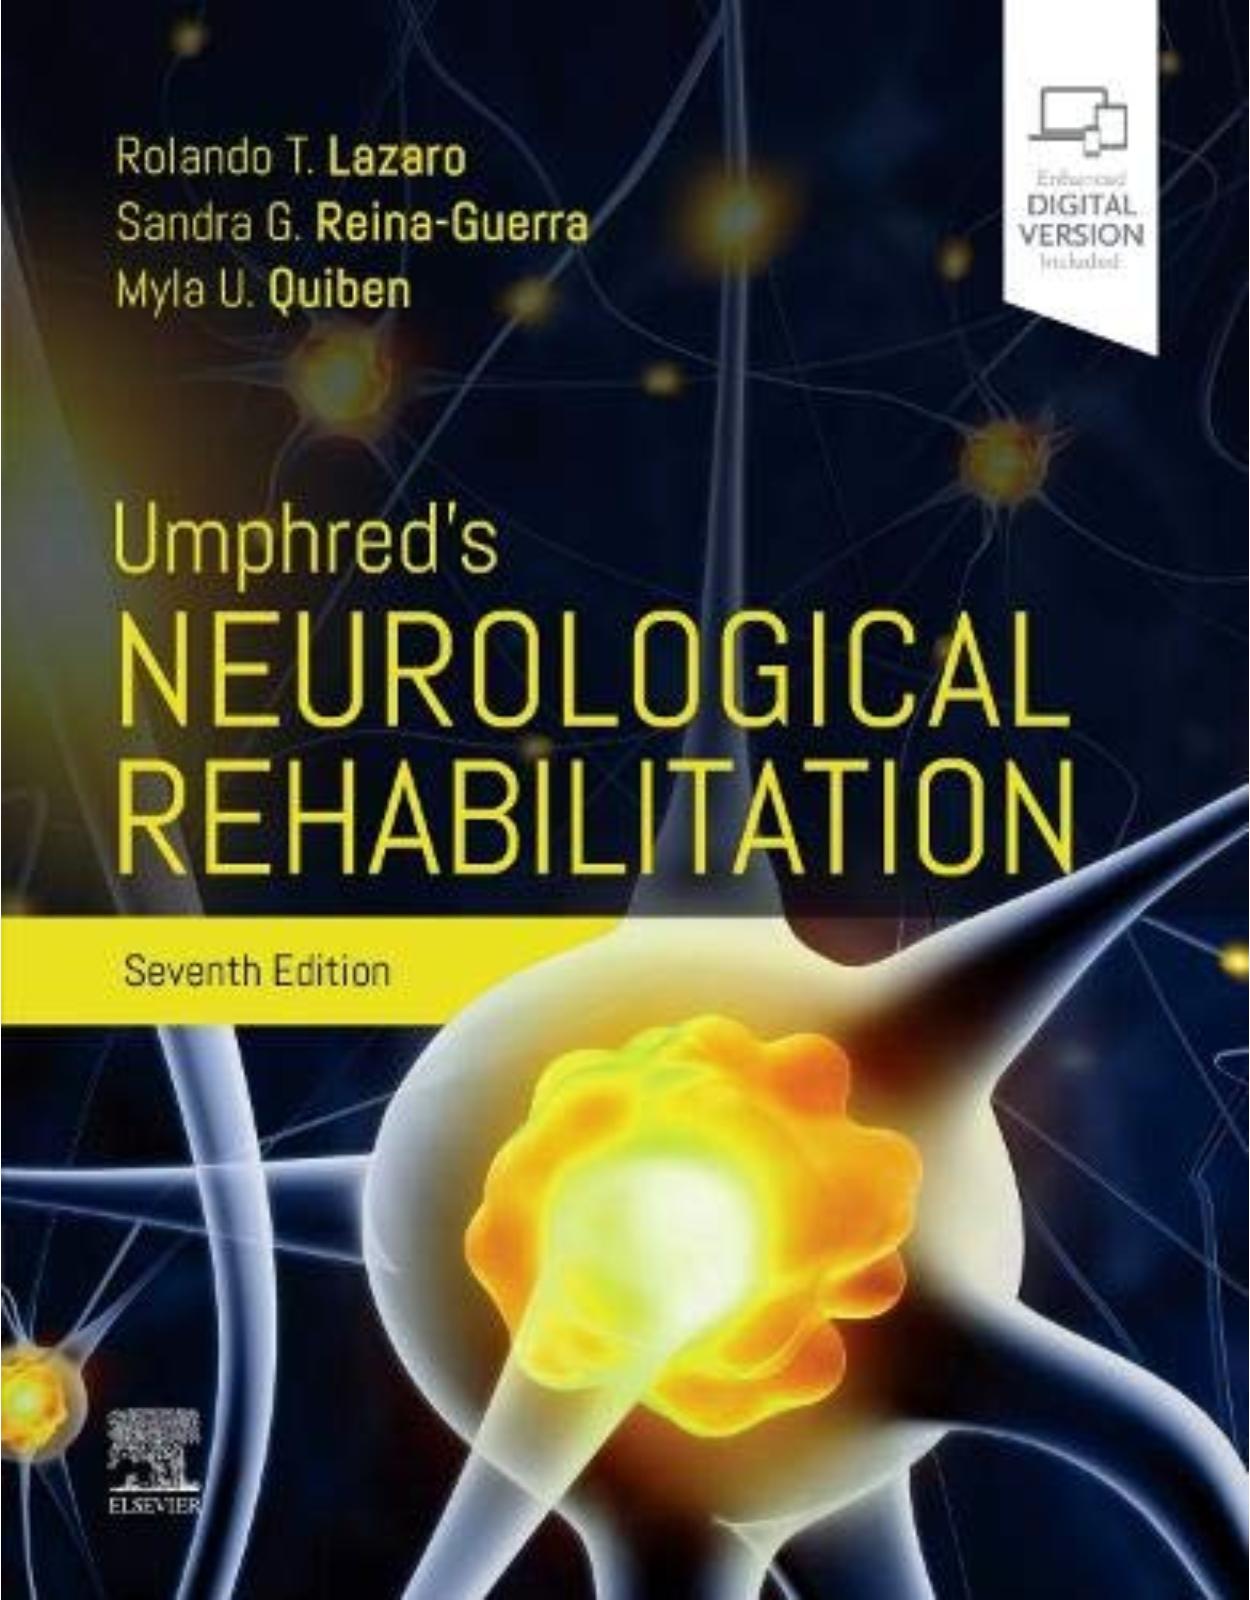 Umphred’s Neurological Rehabilitation, 7th Edition